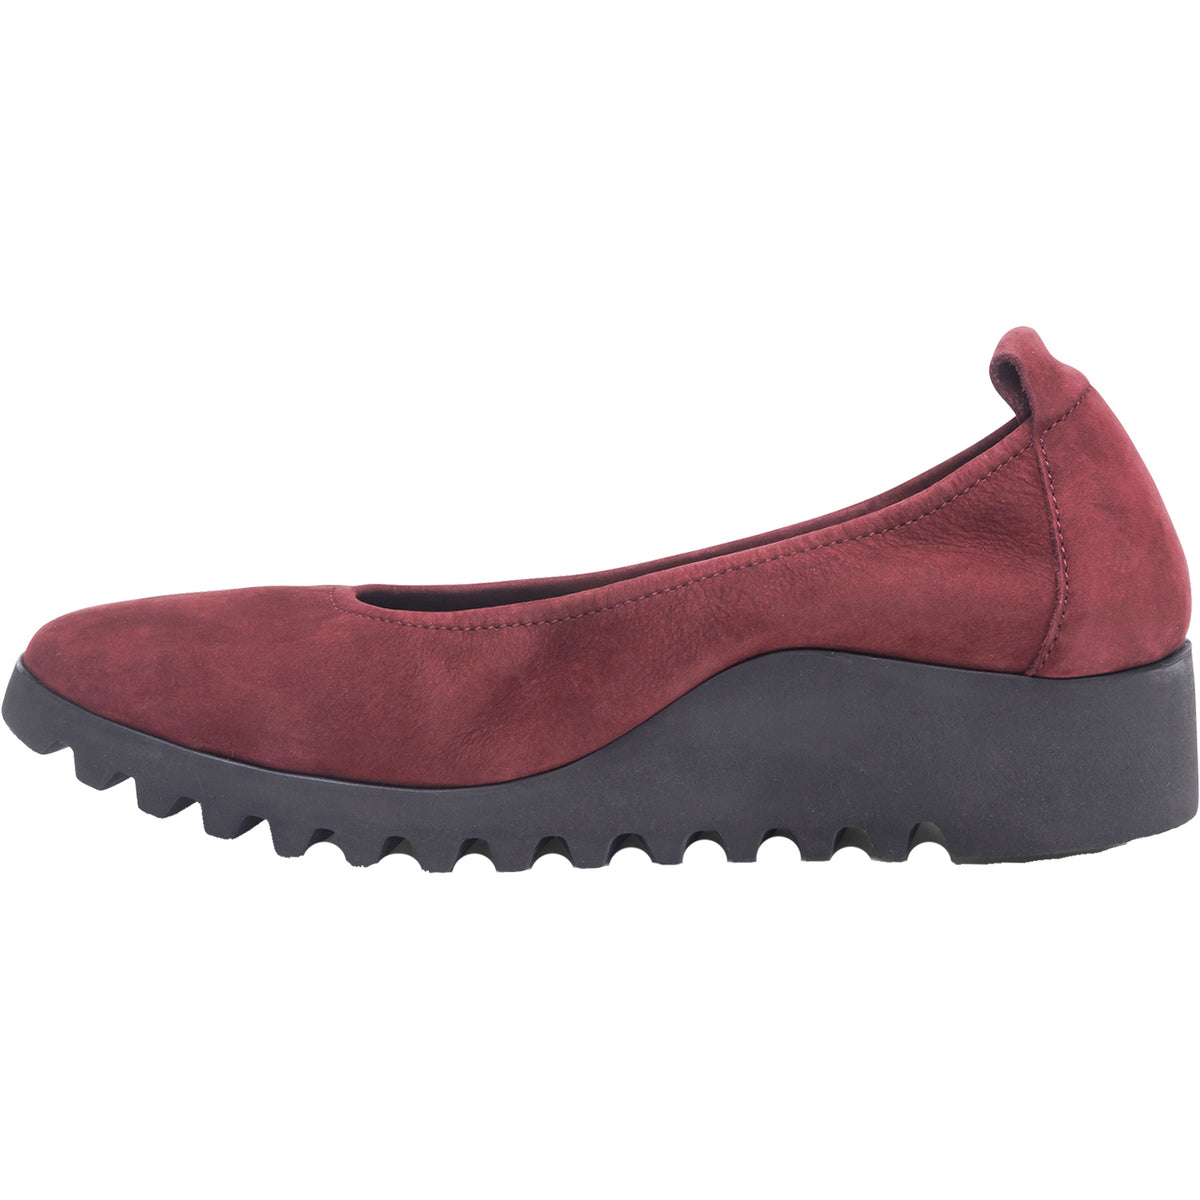 Aetrex Brianna Burgundy | Women's Slip-On Shoes | Footwear etc.